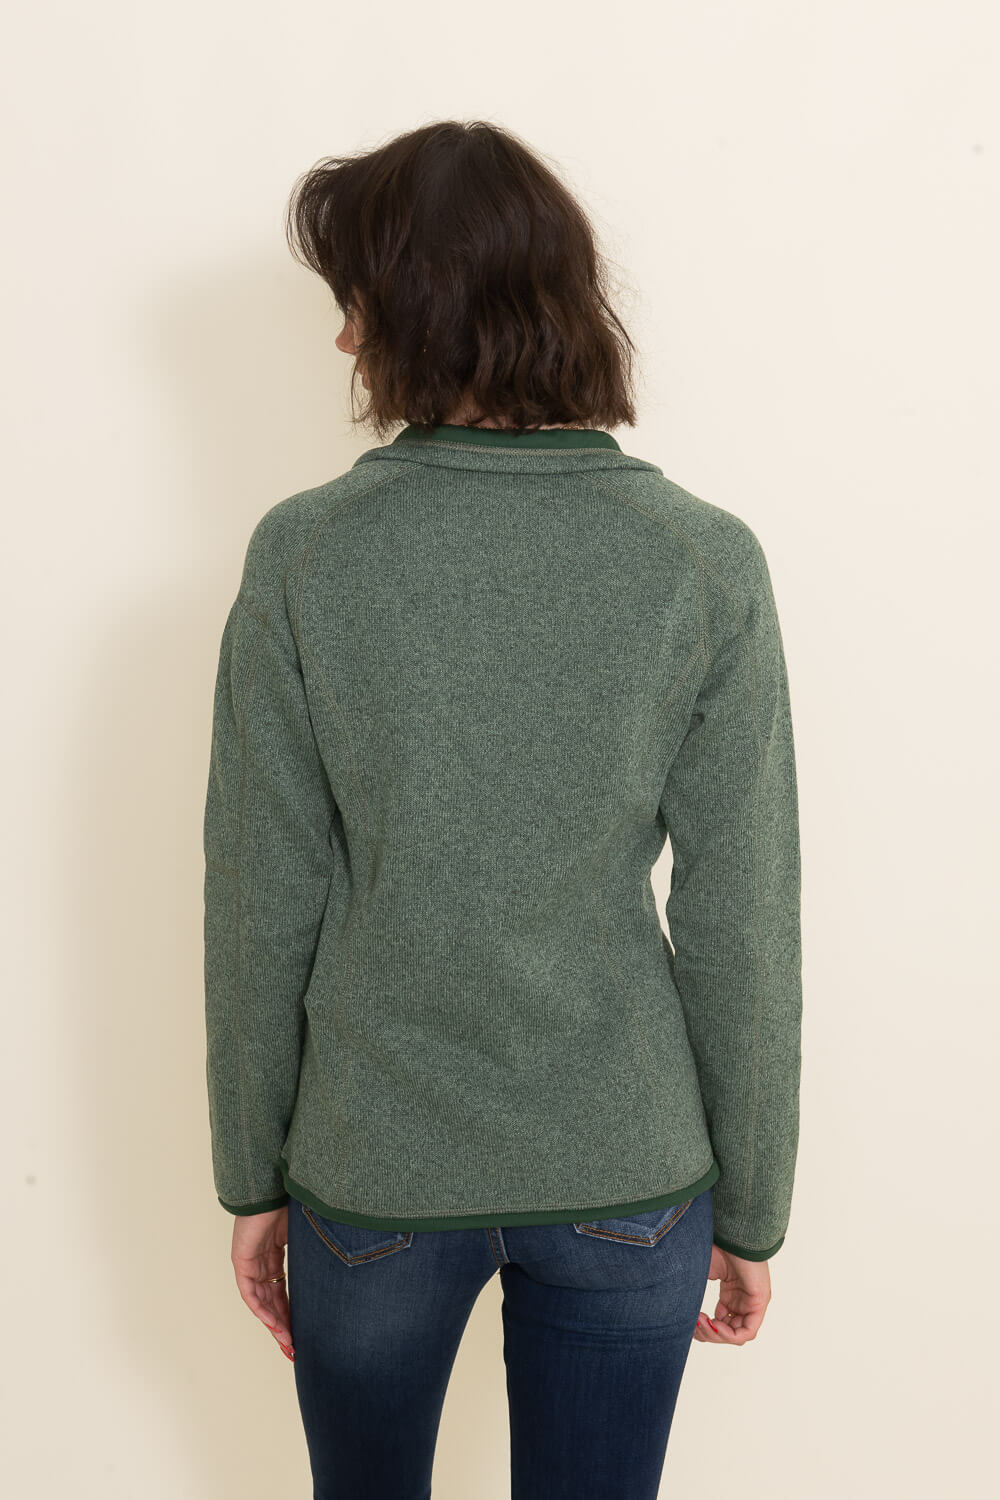 Patagonia Women's Better Sweater Quarter Zip in Green